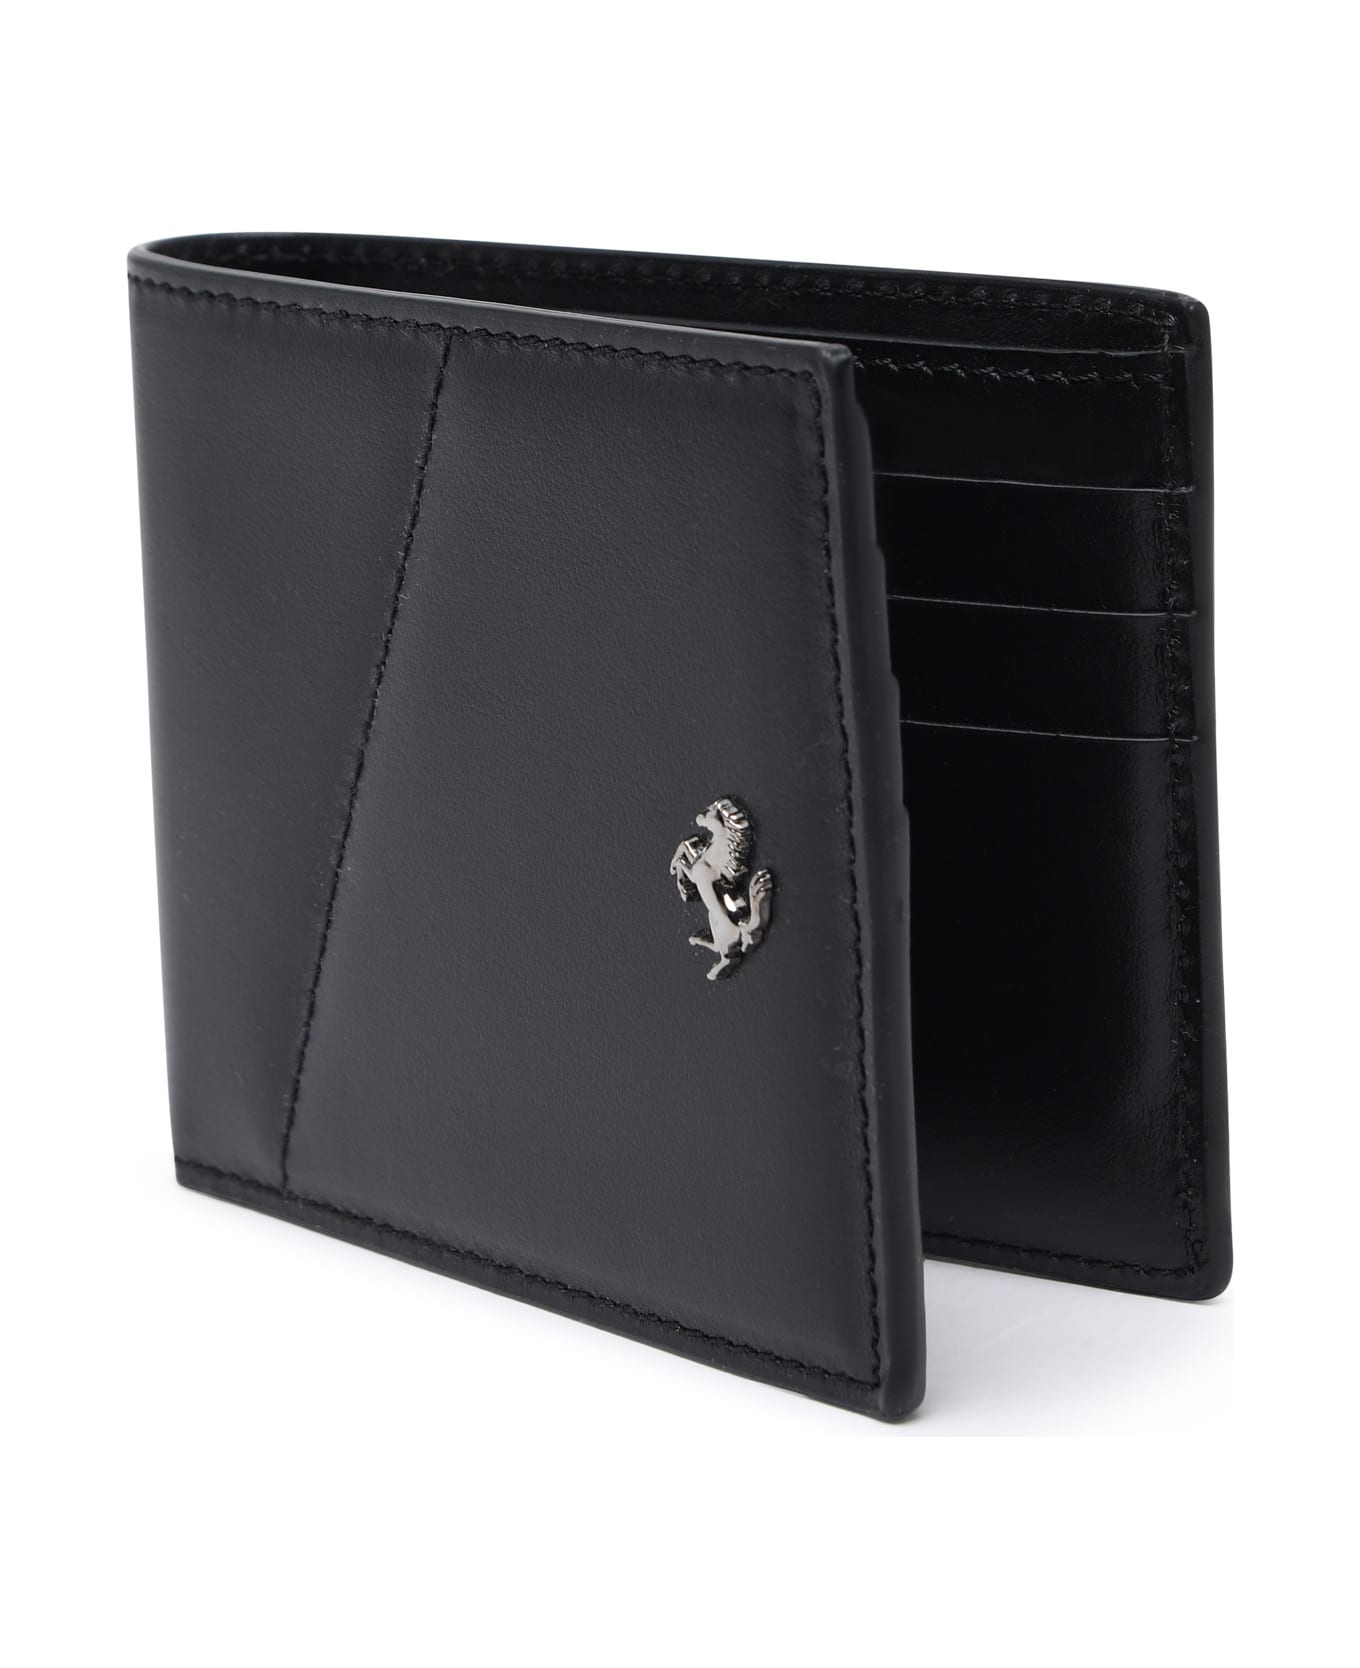 Ferrari Black Leather Wallet - Black